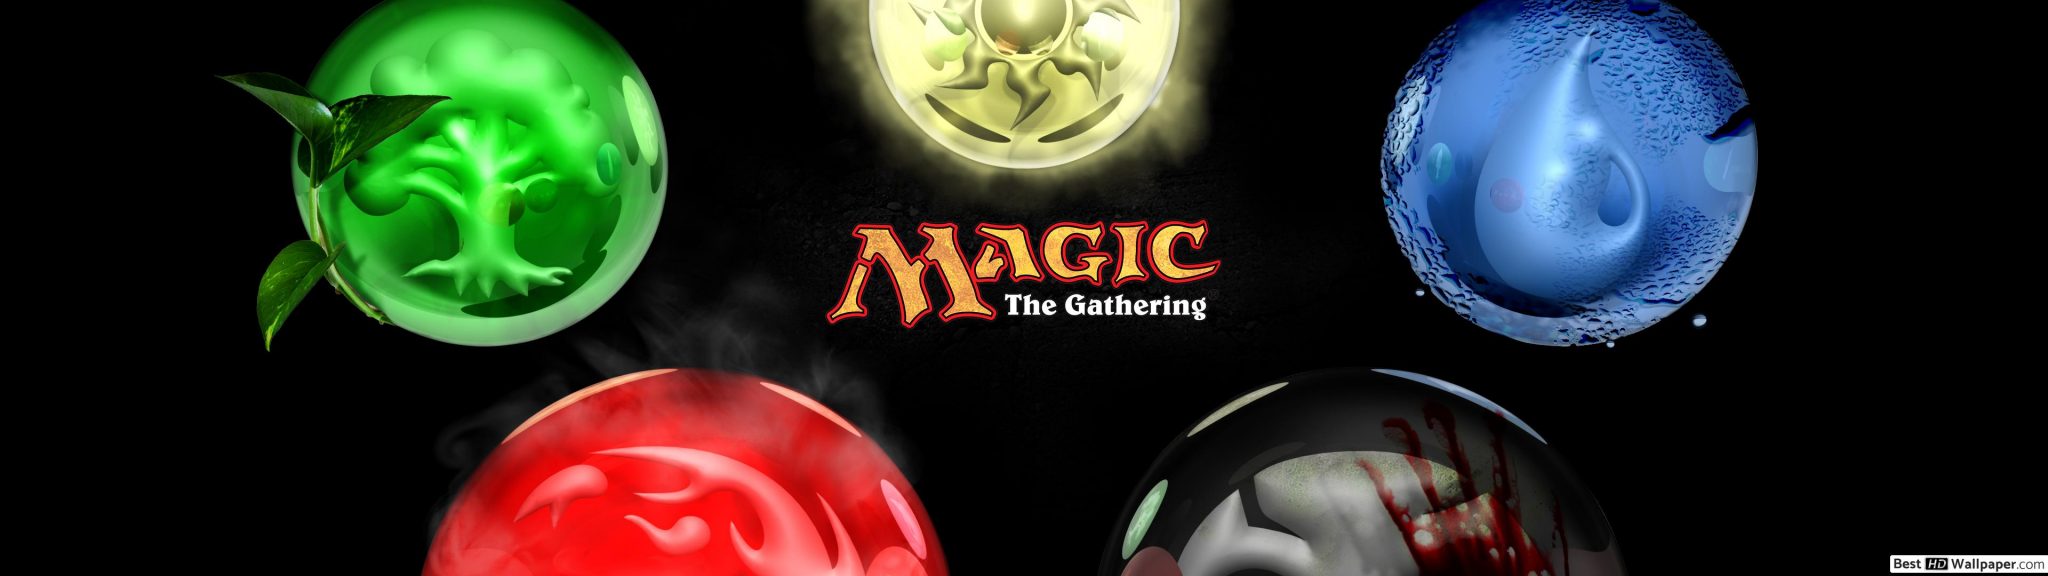 Magic: the Gathering, in arrivo il documentario ufficiale thumbnail